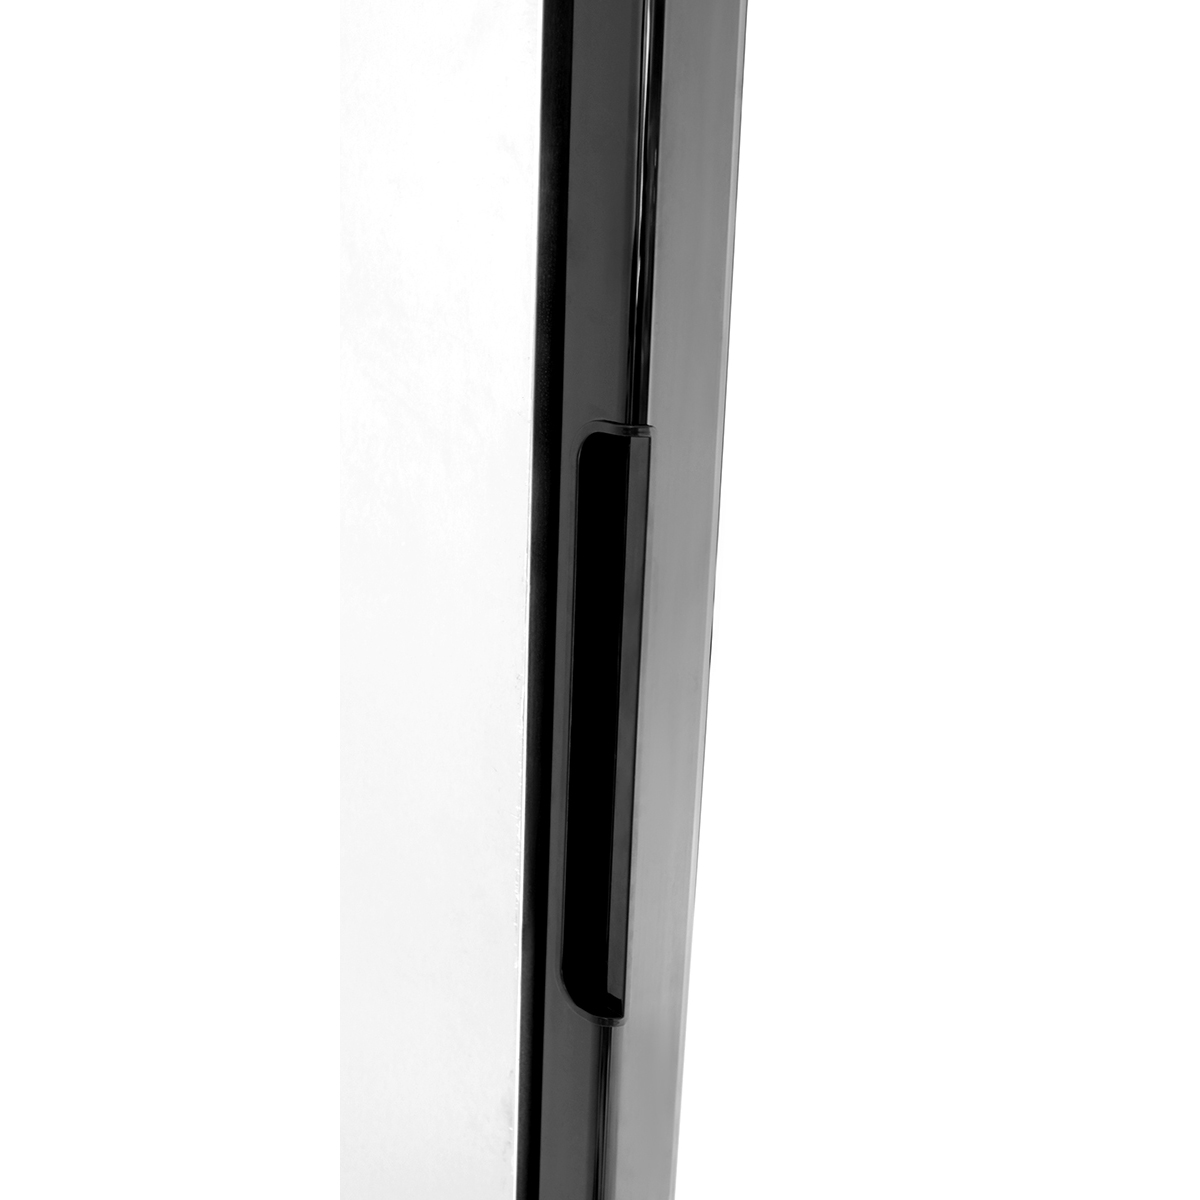 Atosa MCF8701GR Bottom Mount Freezer Merchandiser 26.97"W x 31.5"D x 84.06"H w/Self-Closing Glass Door w/Lock image 5